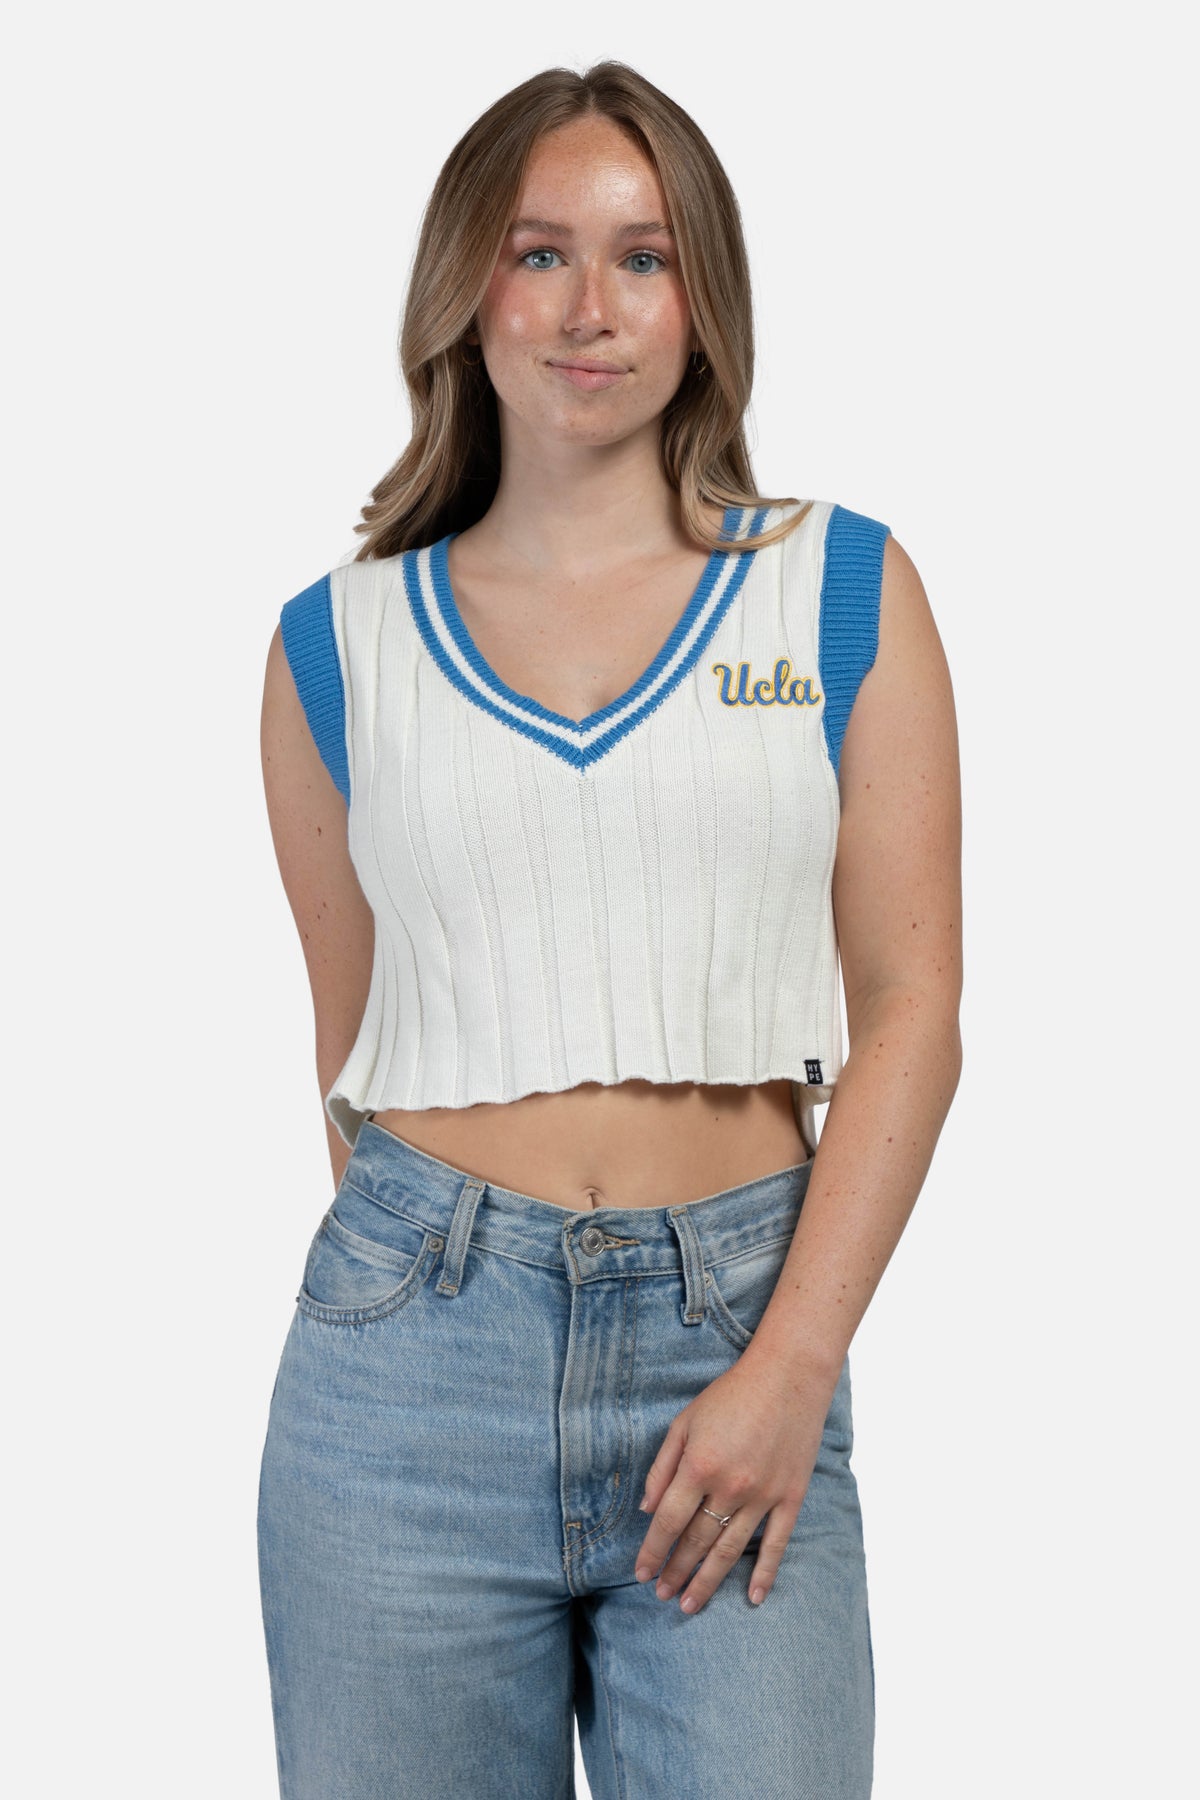 UCLA Chloe Vest